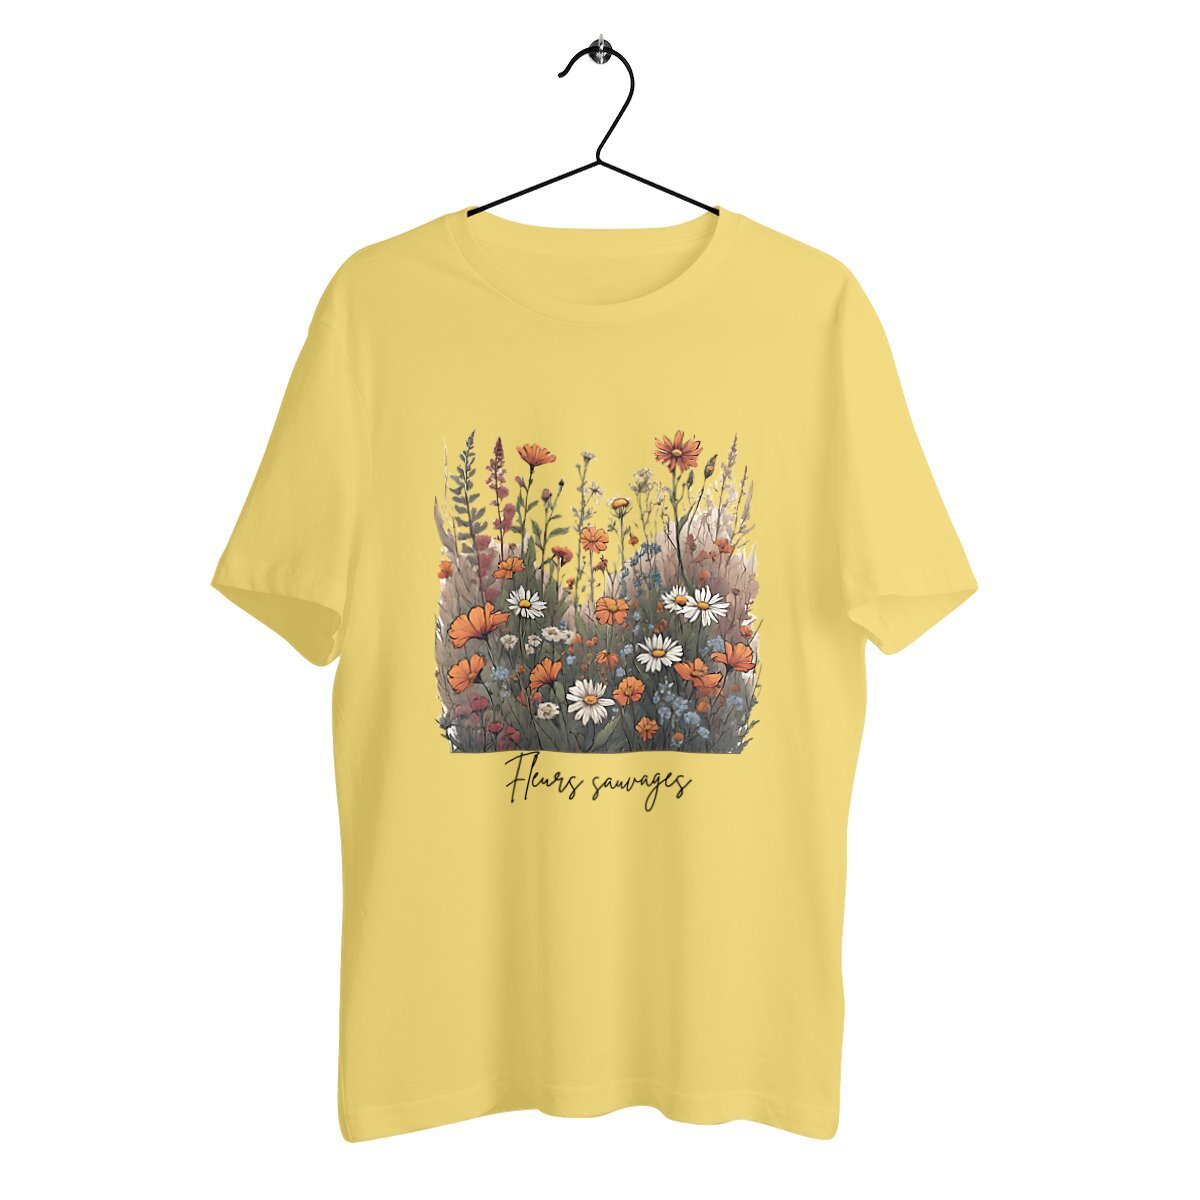 T-shirt Fleurs Sauvages - EtiKo